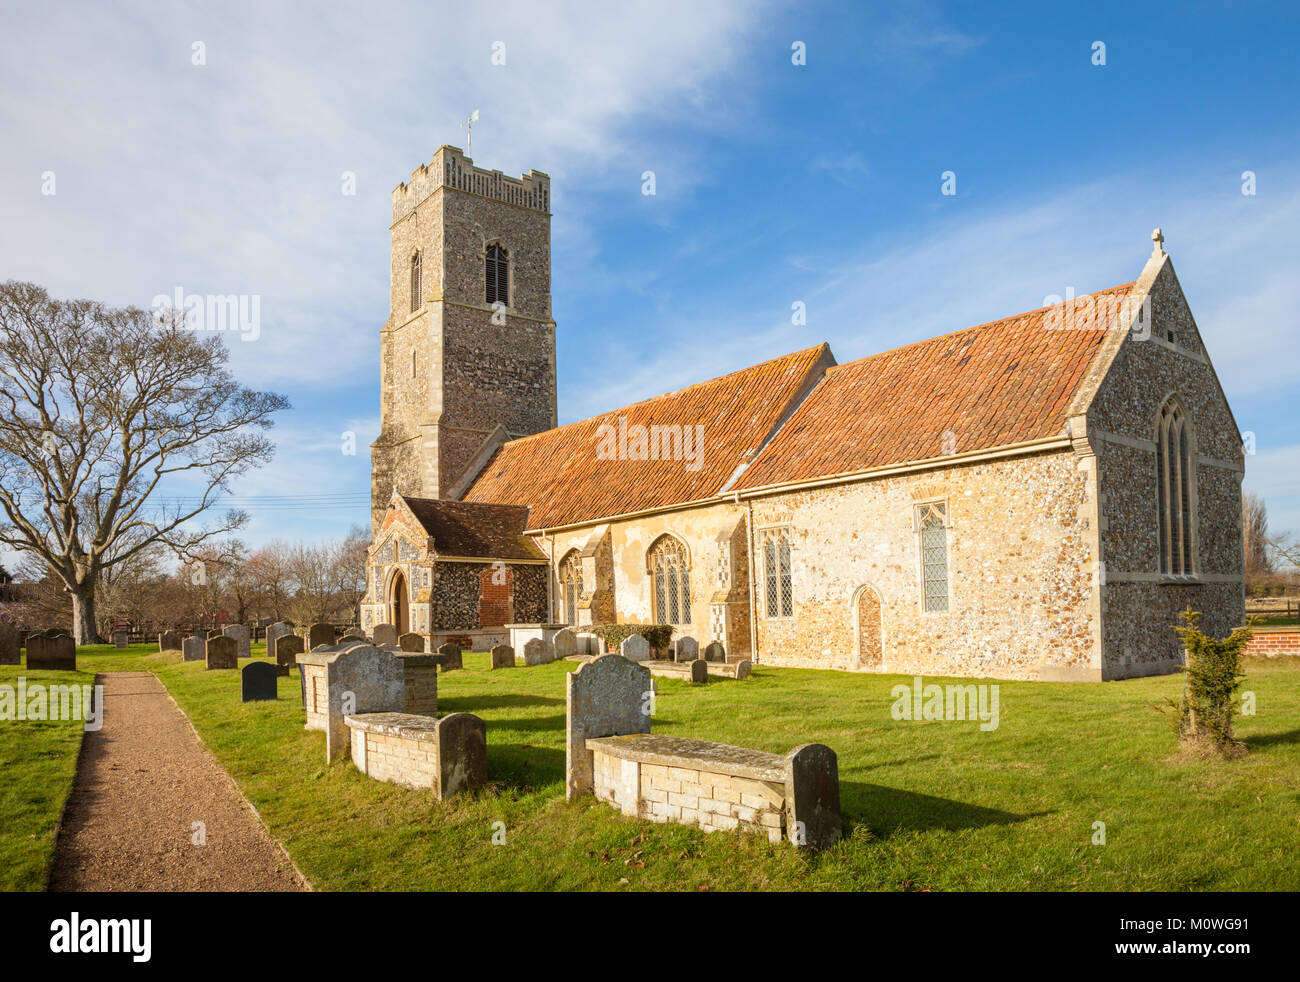 St John the Baptist Church, Snape, Suffolk UK Banque D'Images